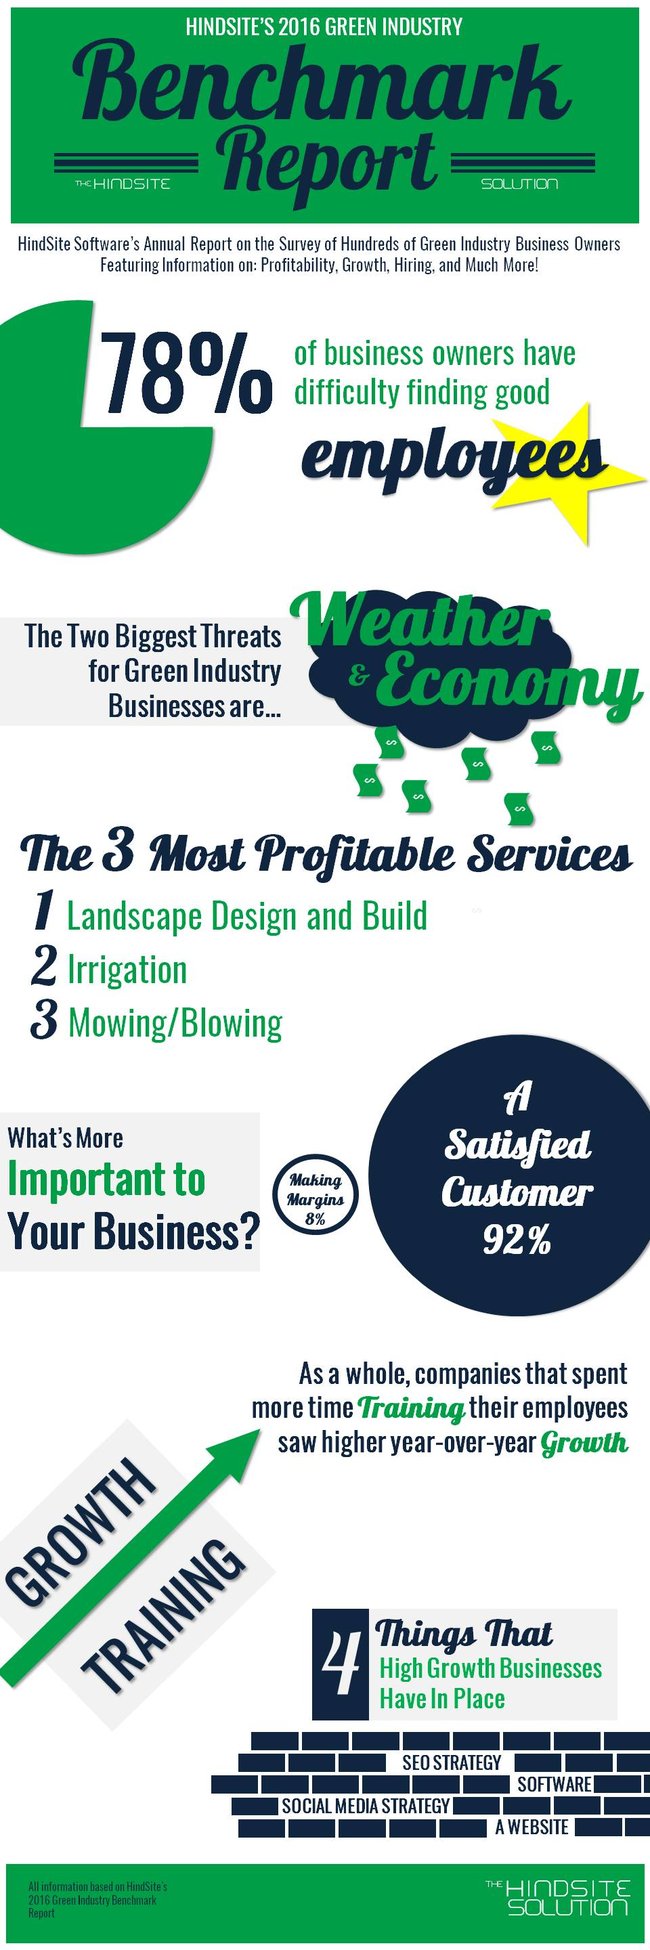 Green_Industry_Benchmark_Report-1.jpg